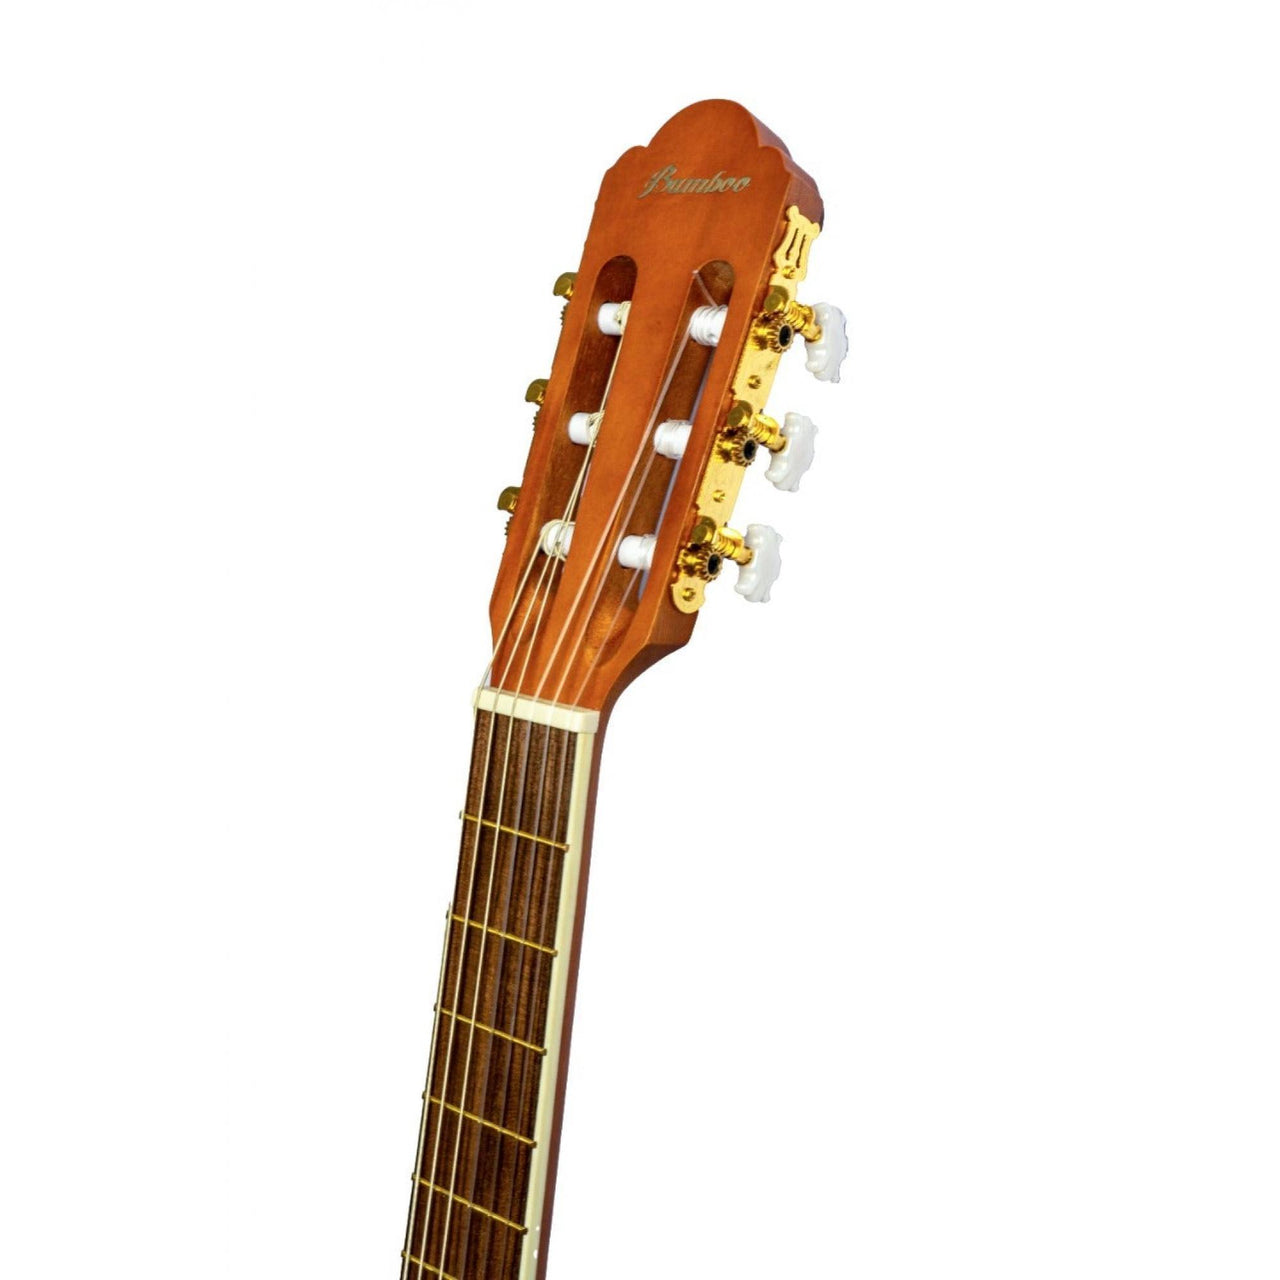 Guitarra Clasica Bamboo Con funda Gc-36-panther